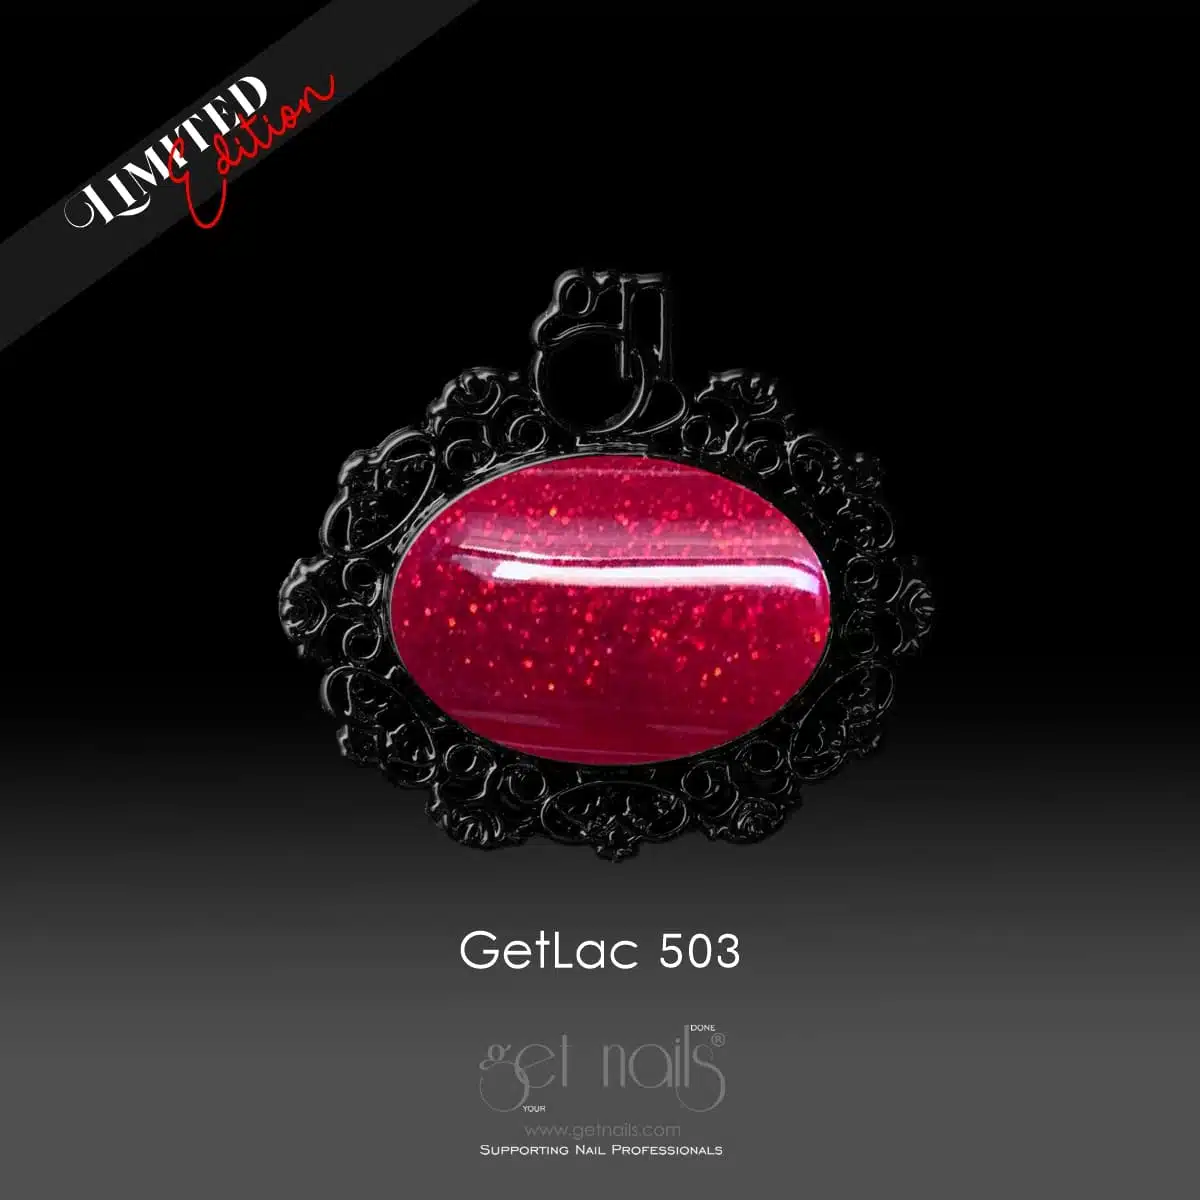 Get Nails Austria - GetLac 503 15 g